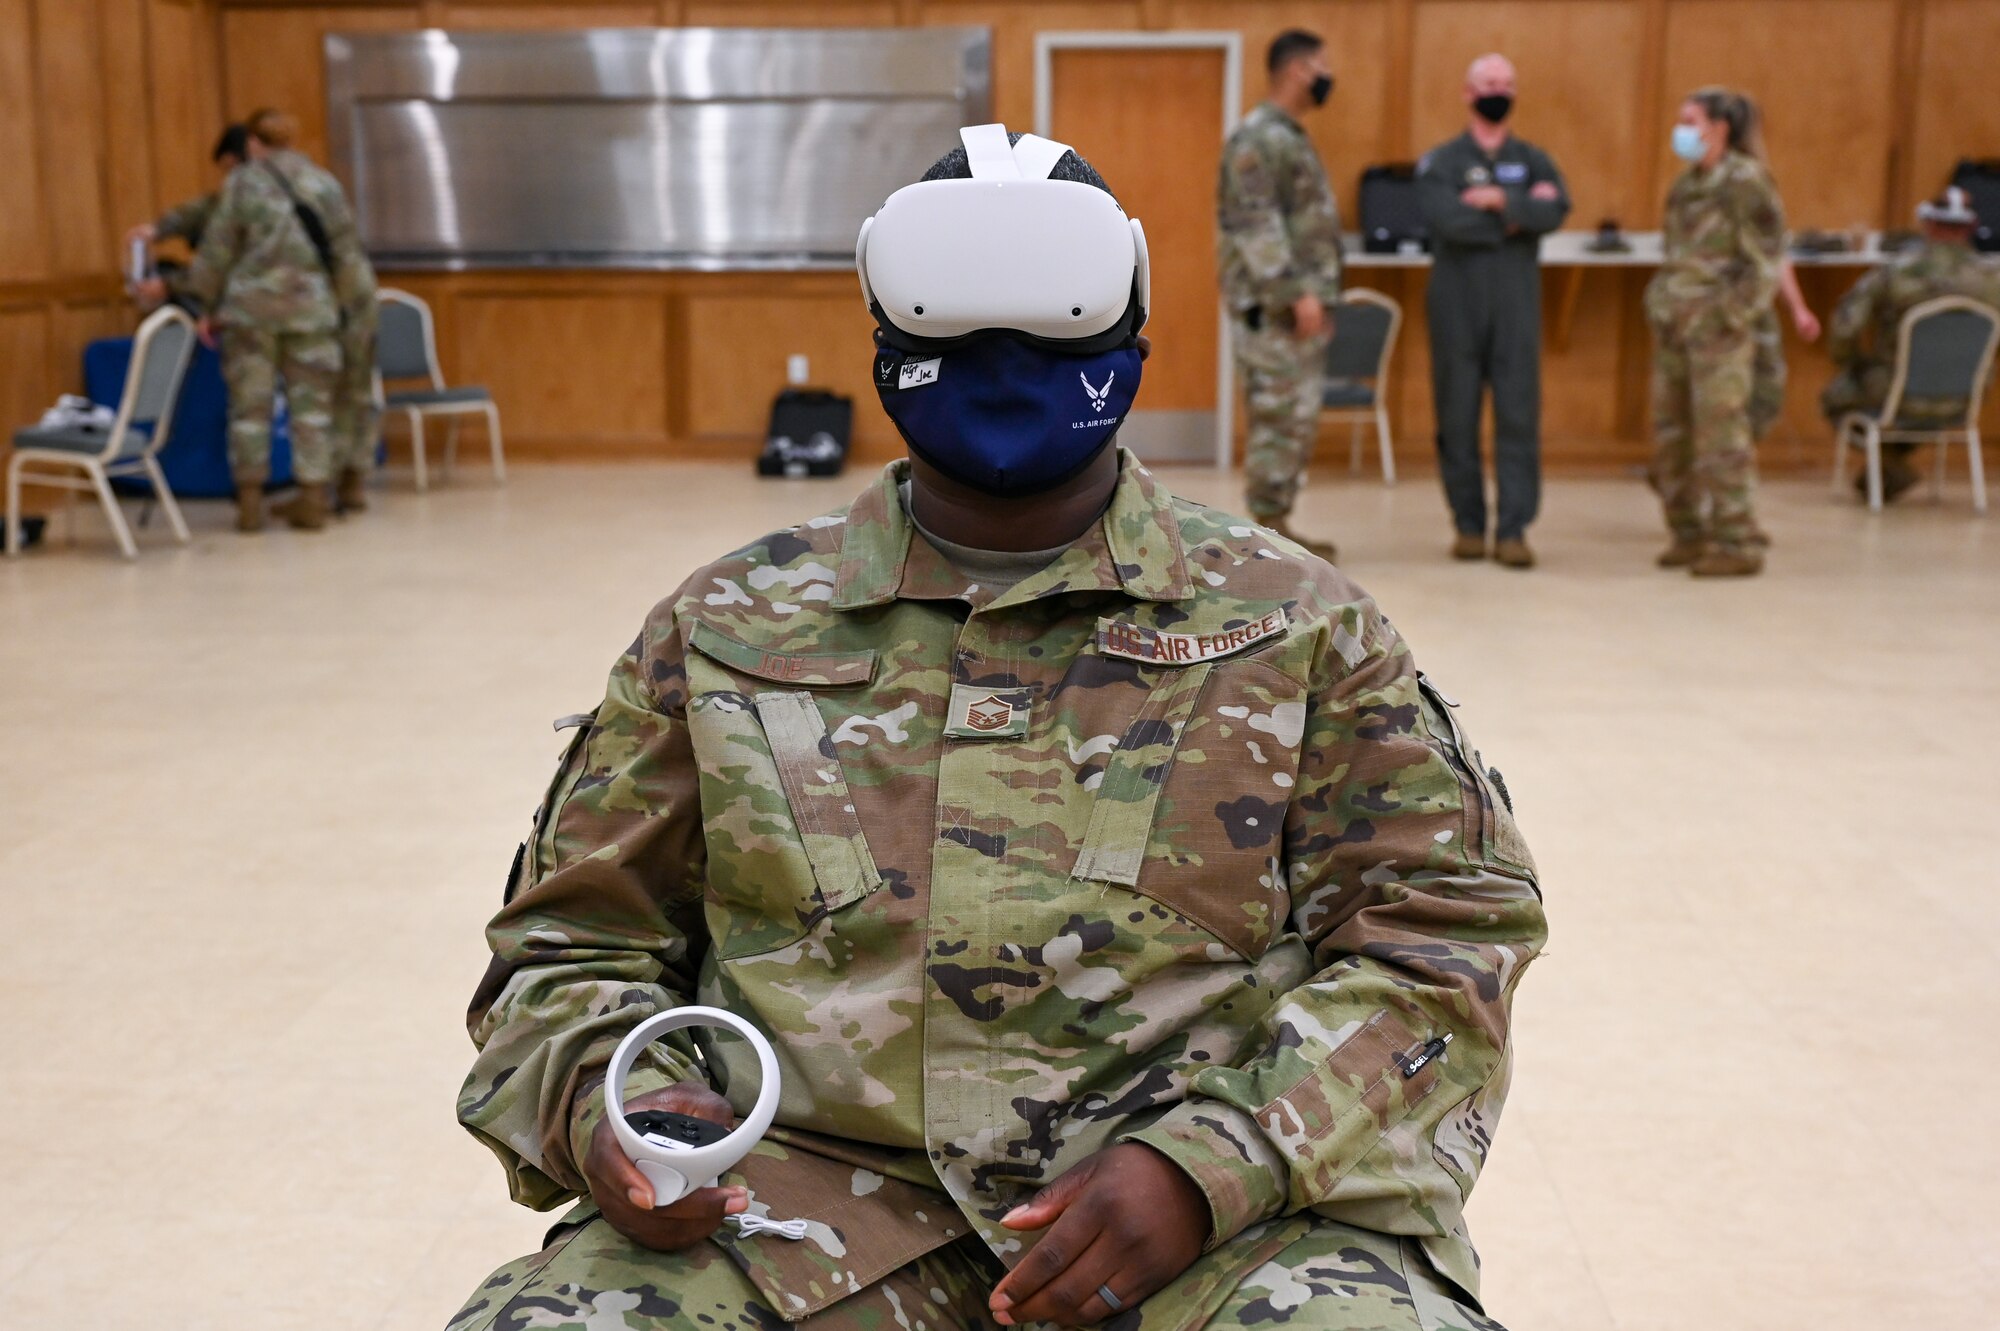 A person uses a virtual reality headset